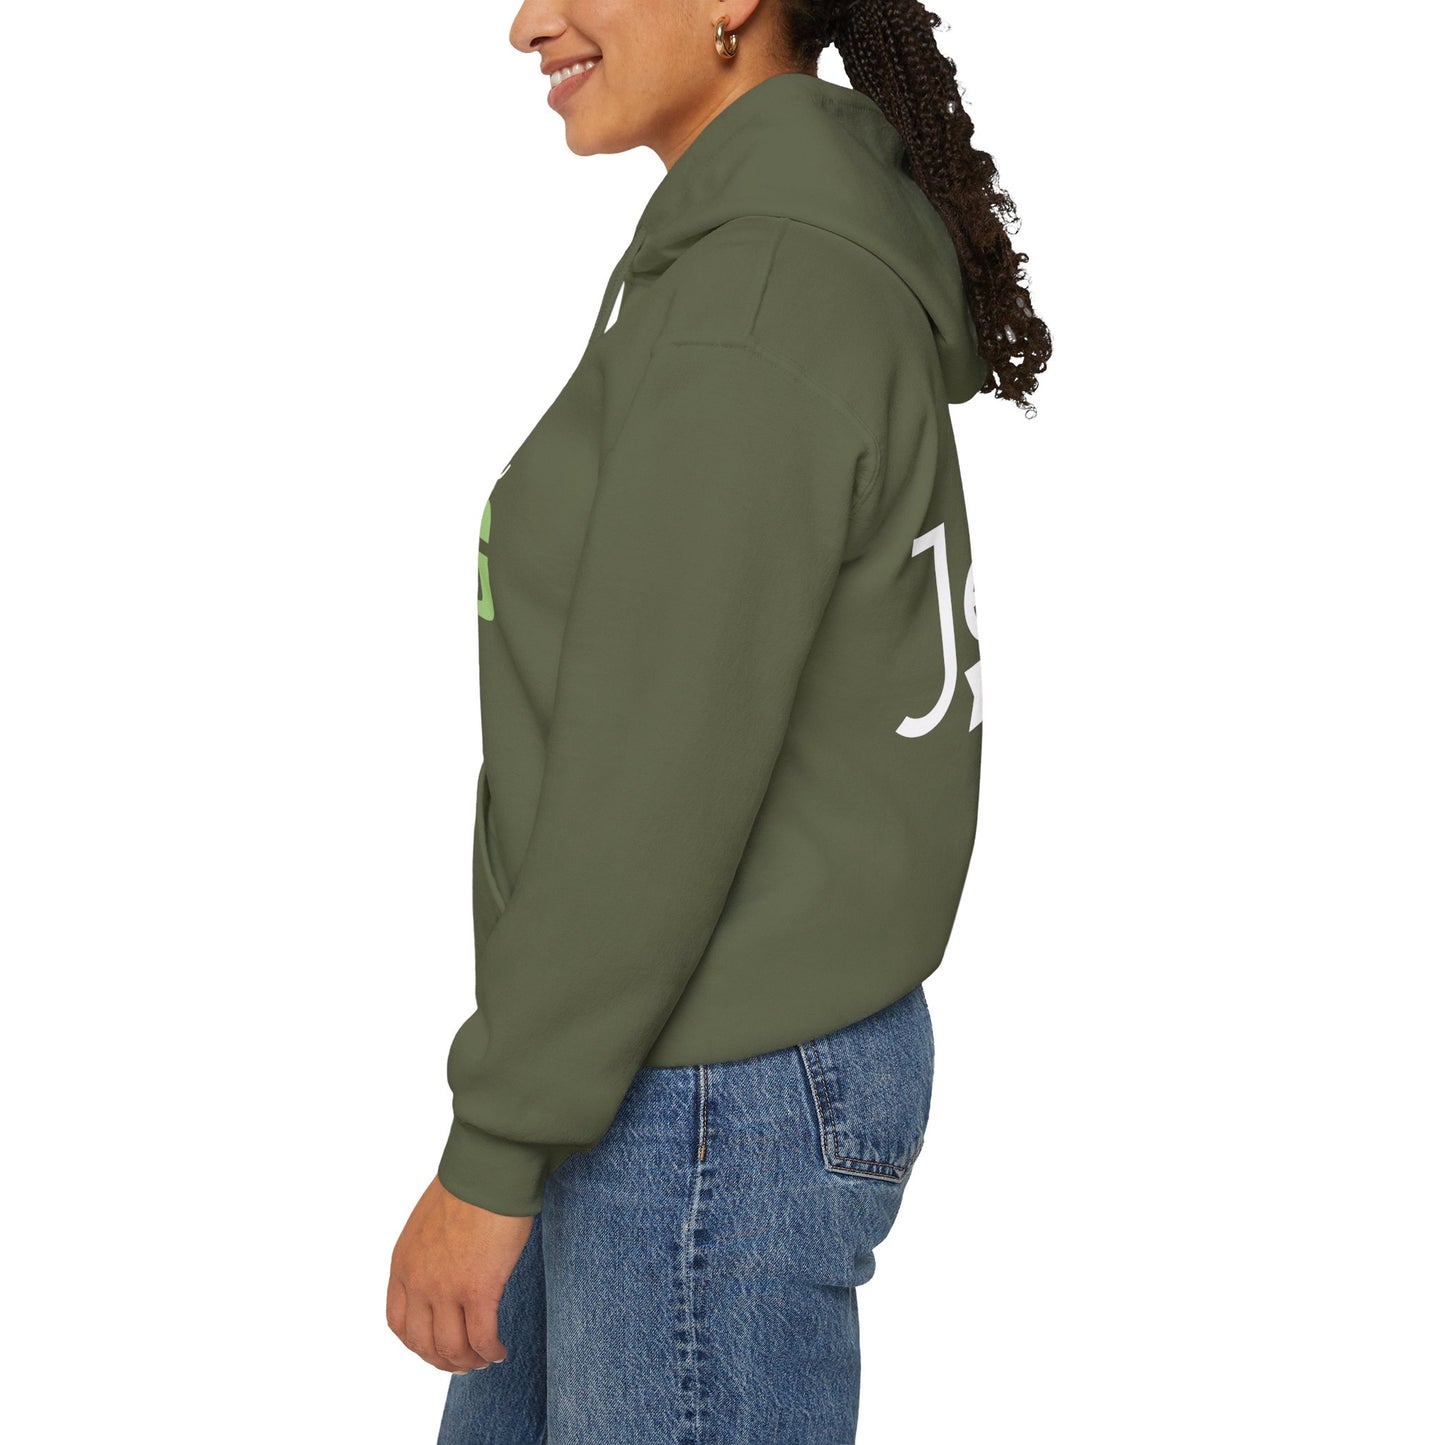 Raising Kids And Trusting God Women's Christian Hooded Pullover Sweatshirt